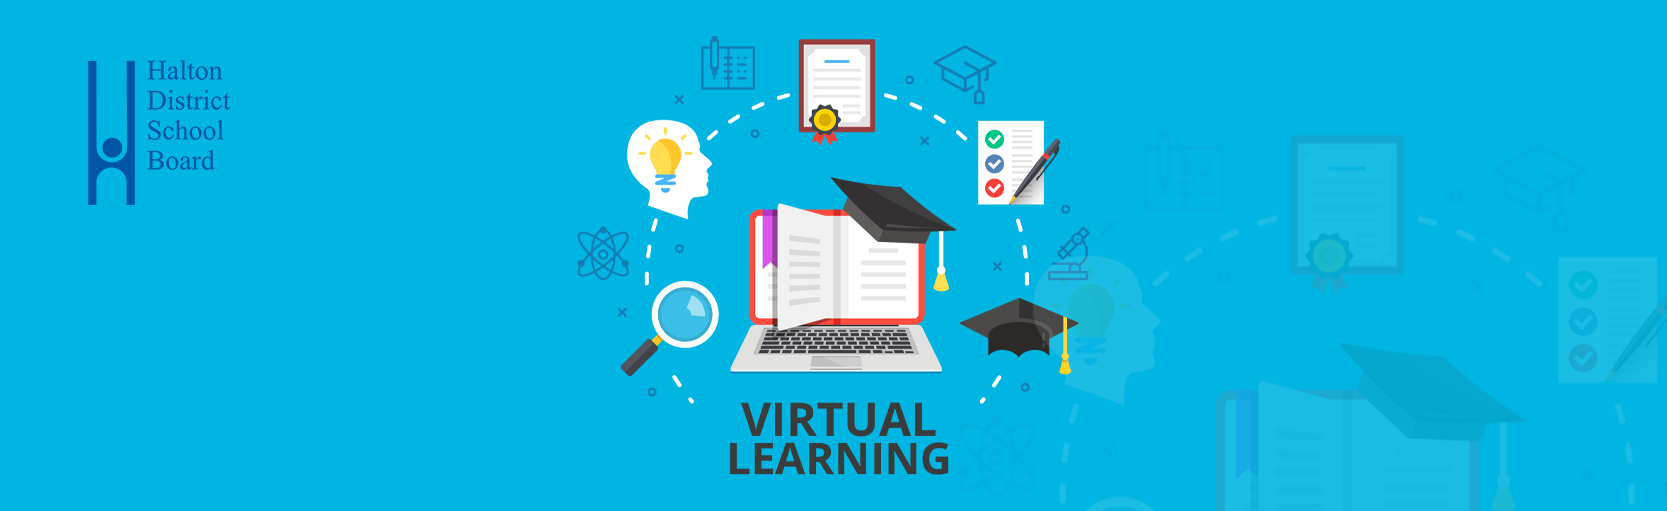 Virtual Learning at the HDSB